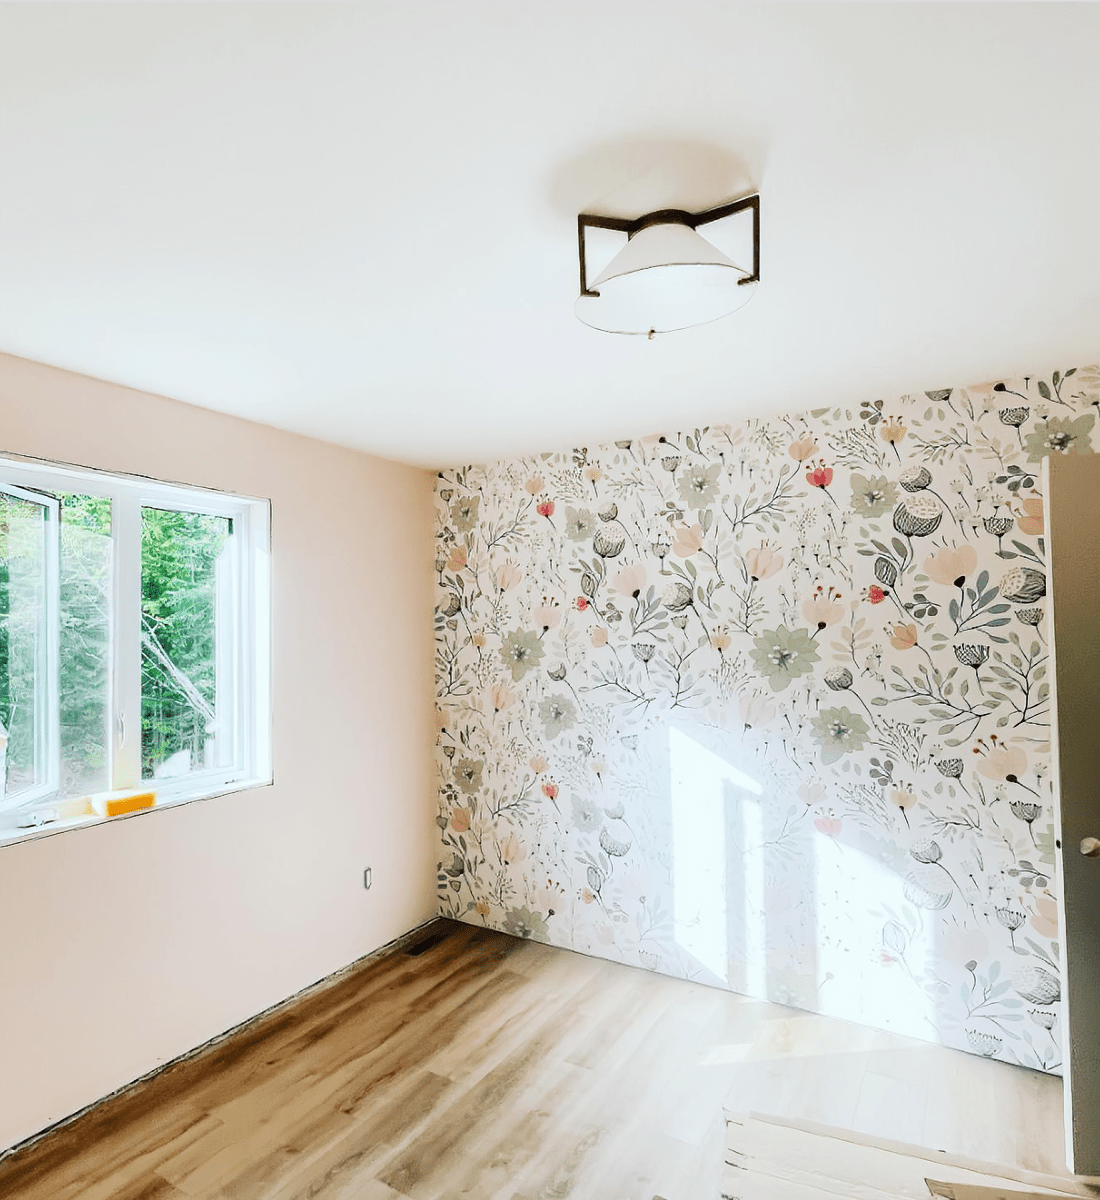 Empty room with floral wallpaper and hardwood floor before furniture arrangement."